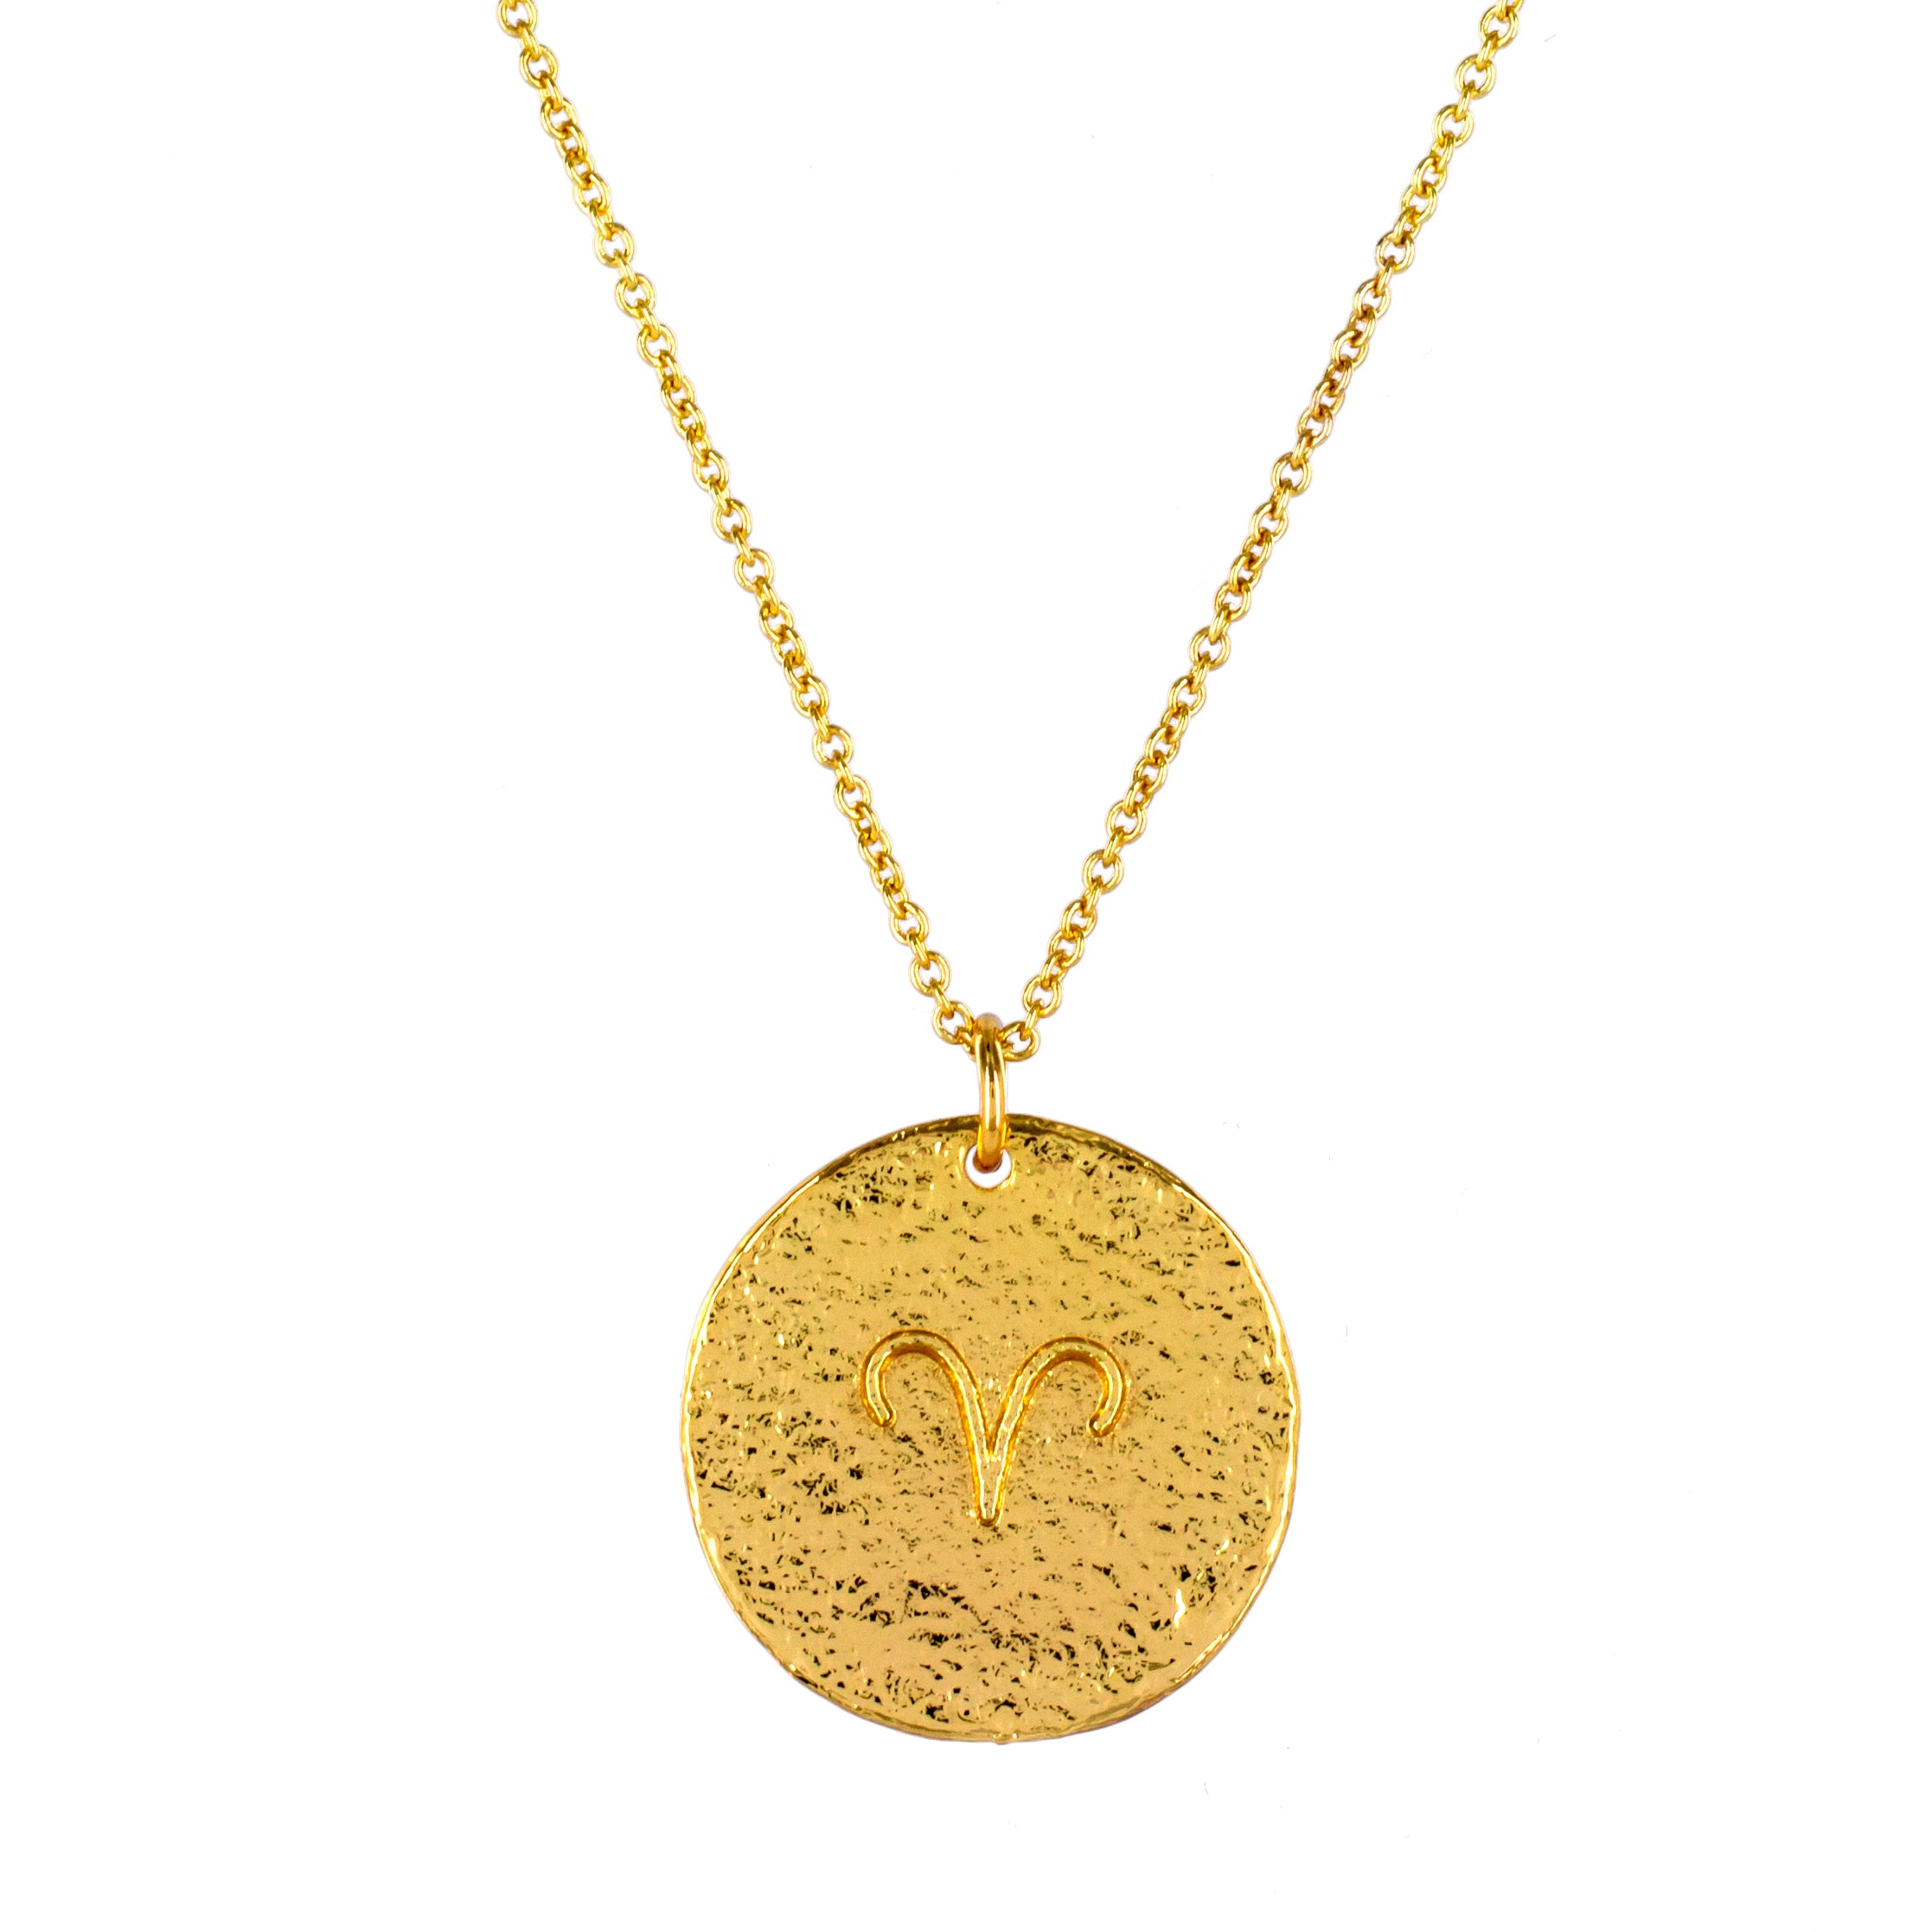 astrologie collier bélier- astrodisiac - bijoux - paris - claire naa - jewels - necklace aries - astrology